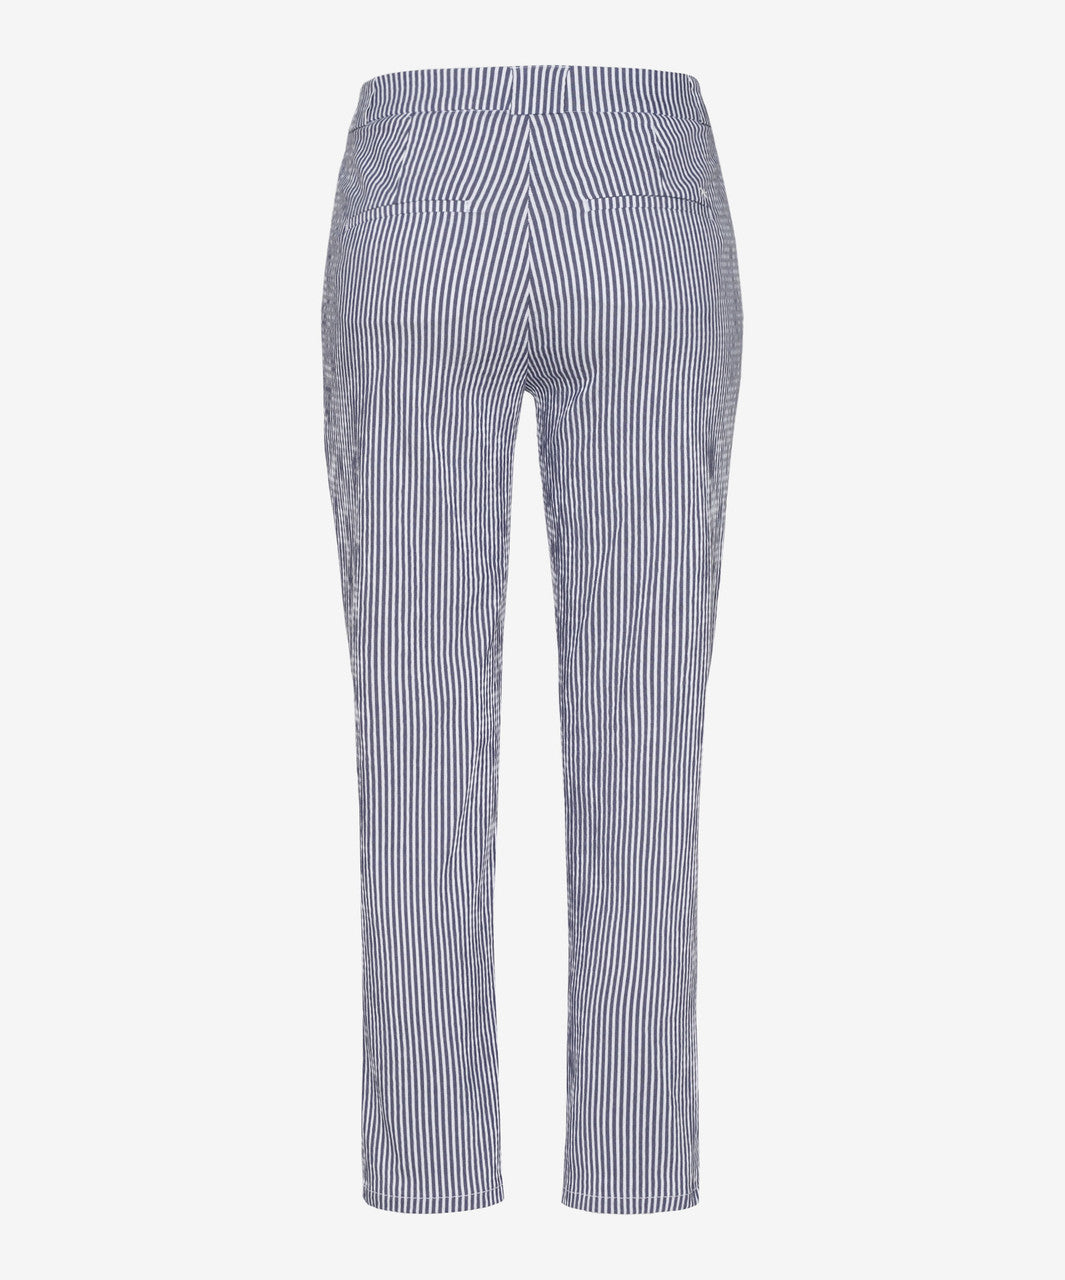 Brax Mara Blue/White Striped Pants